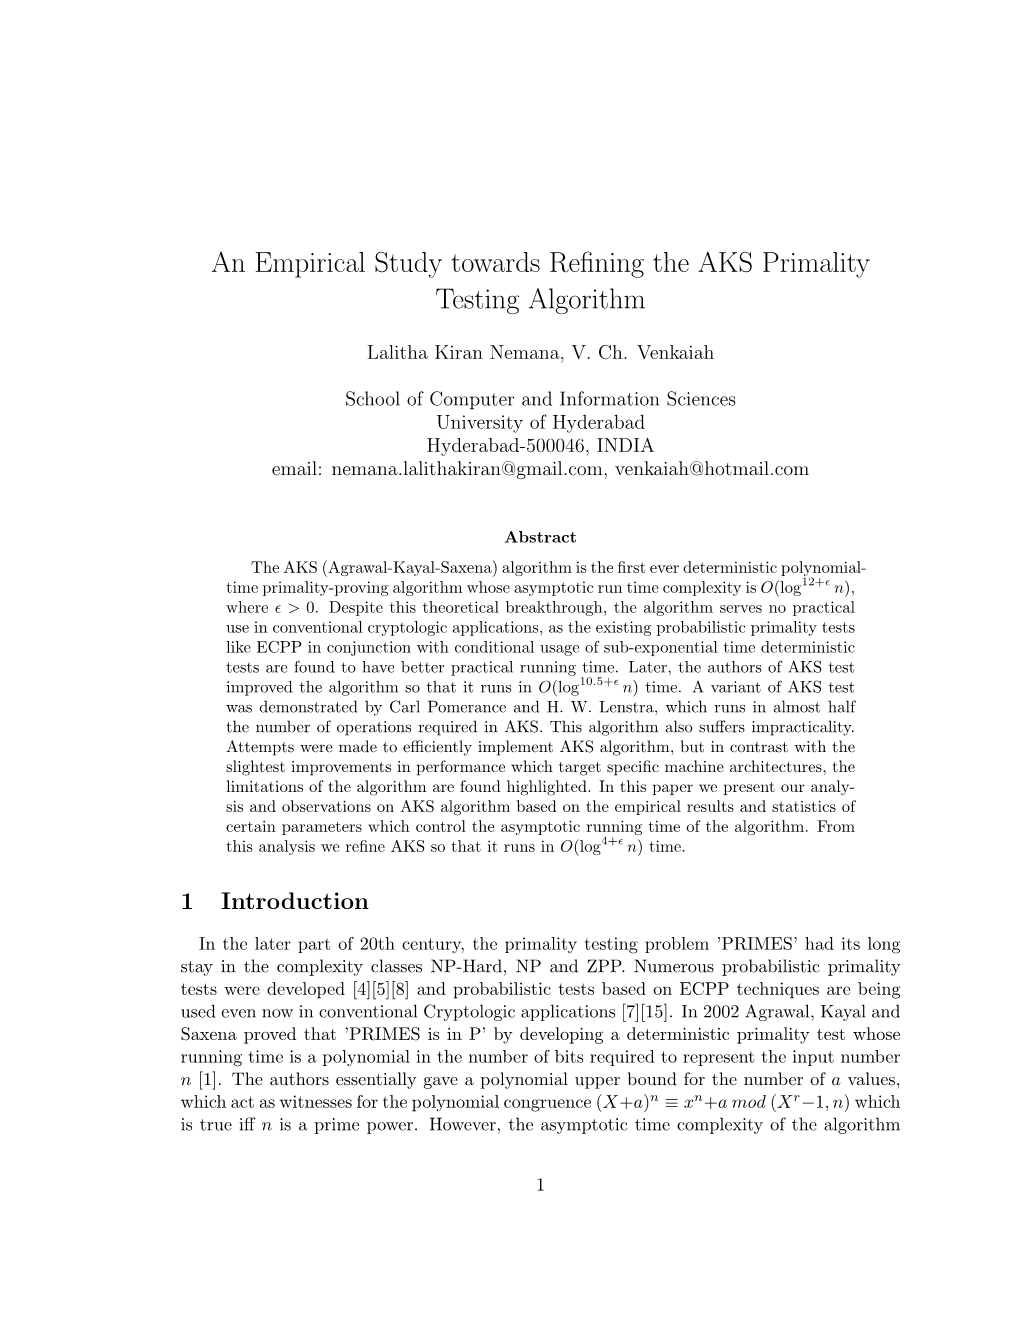 An Empirical Study Towards Refining the AKS Primality Testing Algorithm